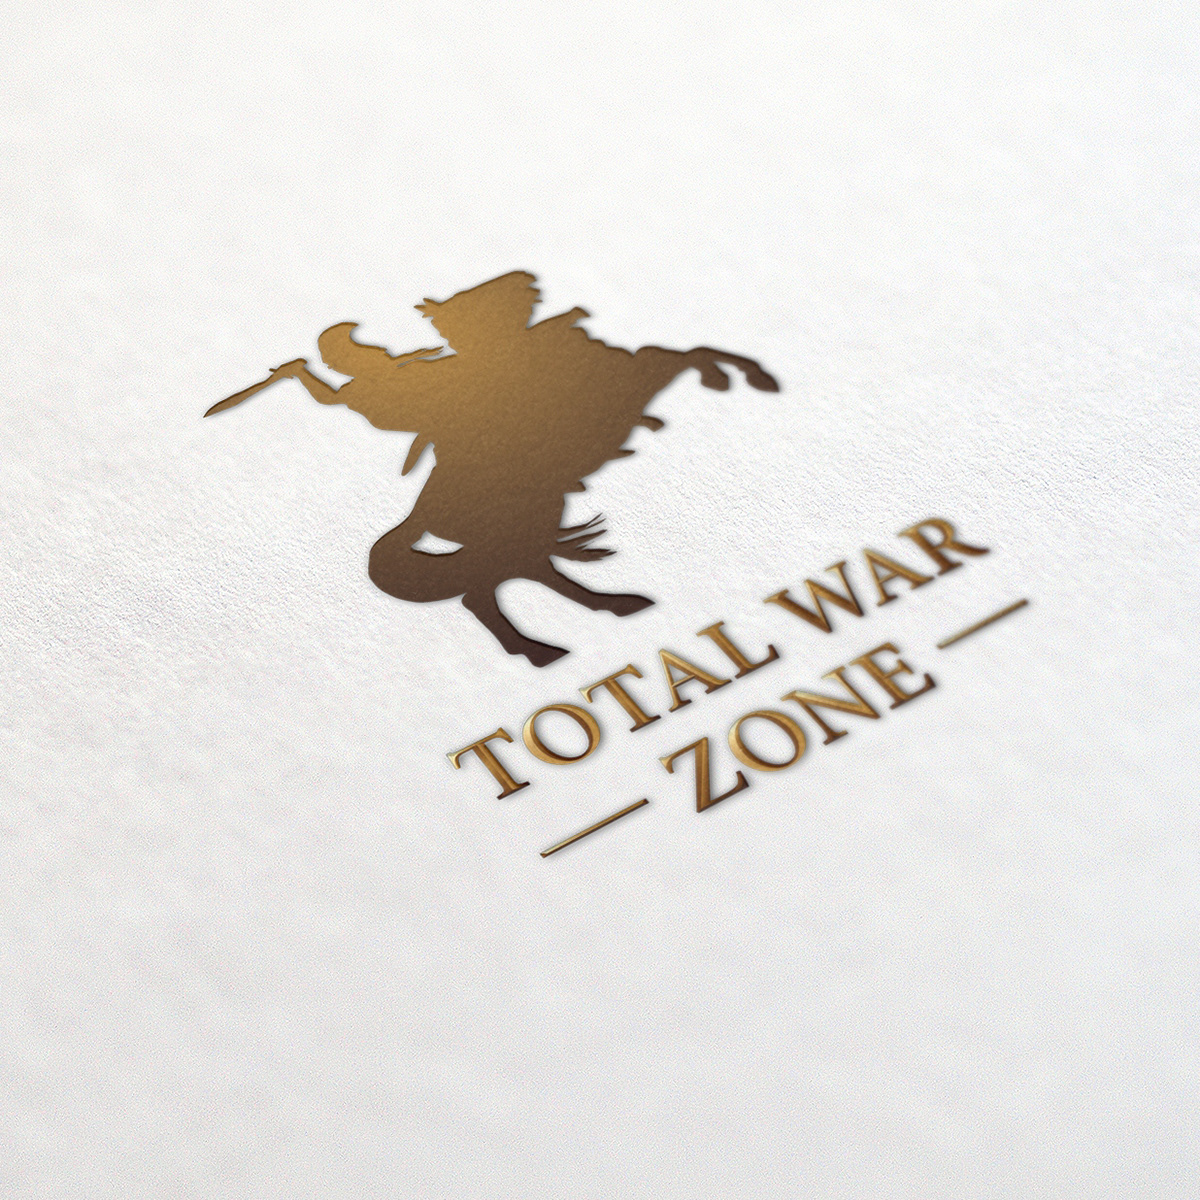 total war logo fansite